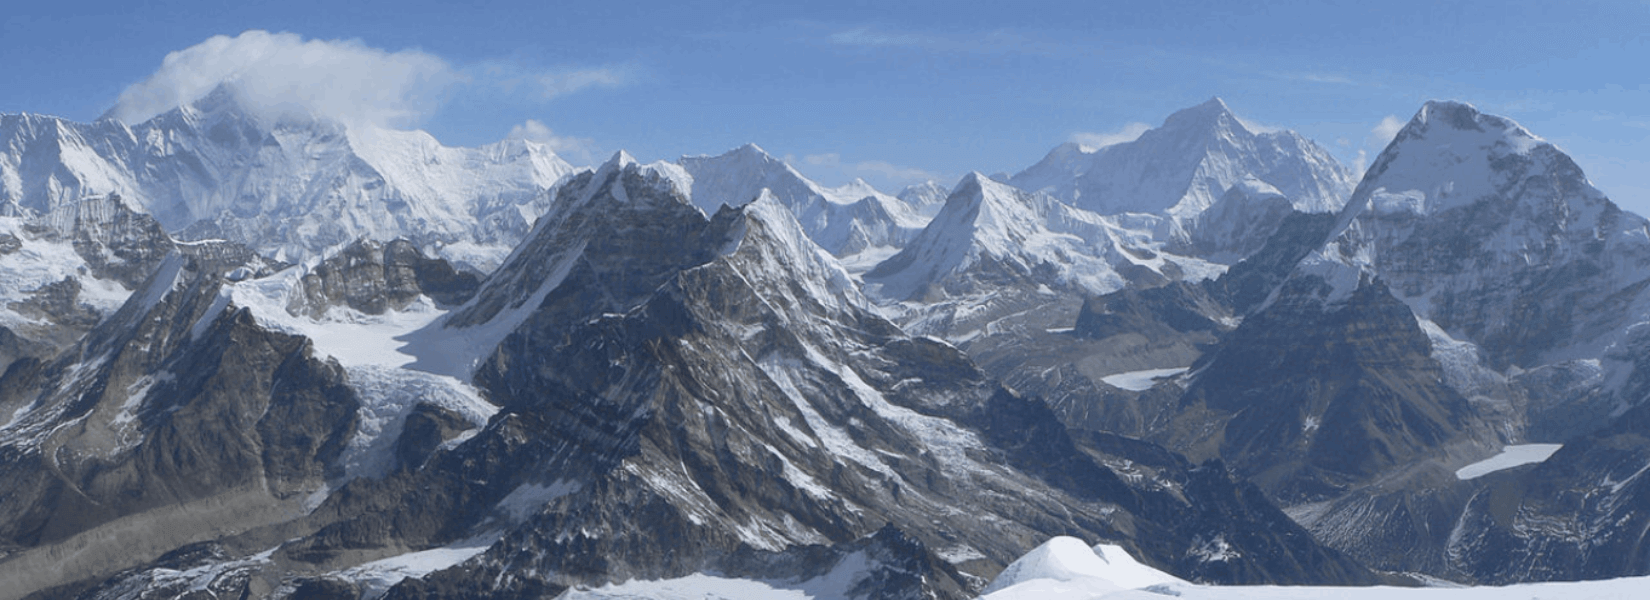 Nepal Peak Climbing Permit Cost Discount Offers